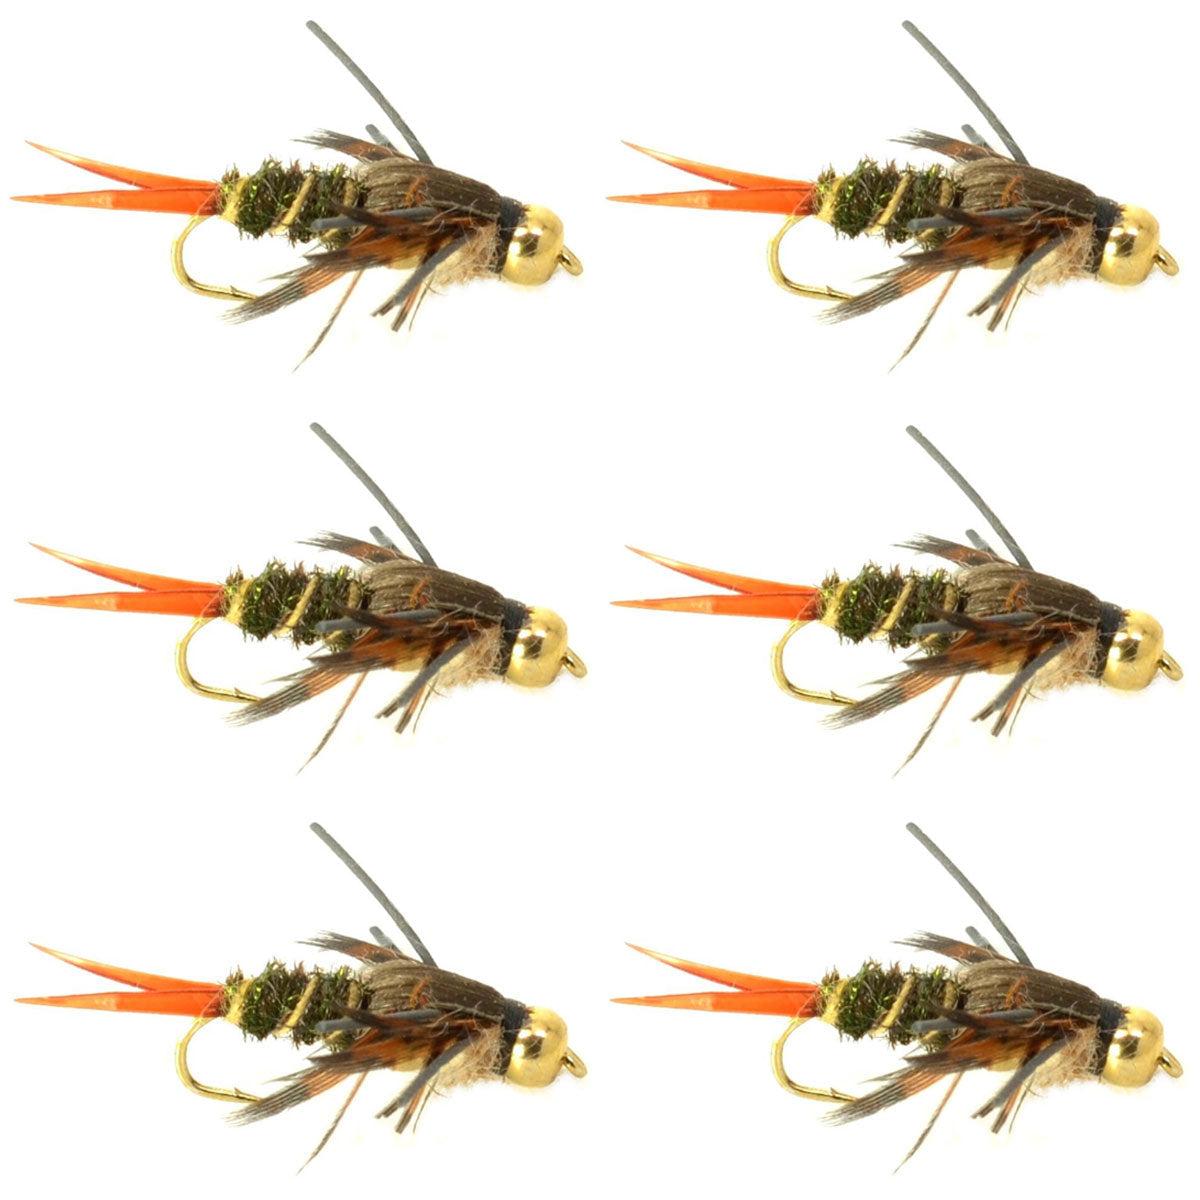 Double Bead Twenty Incher Nymph Fly Fishing Flies - 6 Flies Hook Size 8